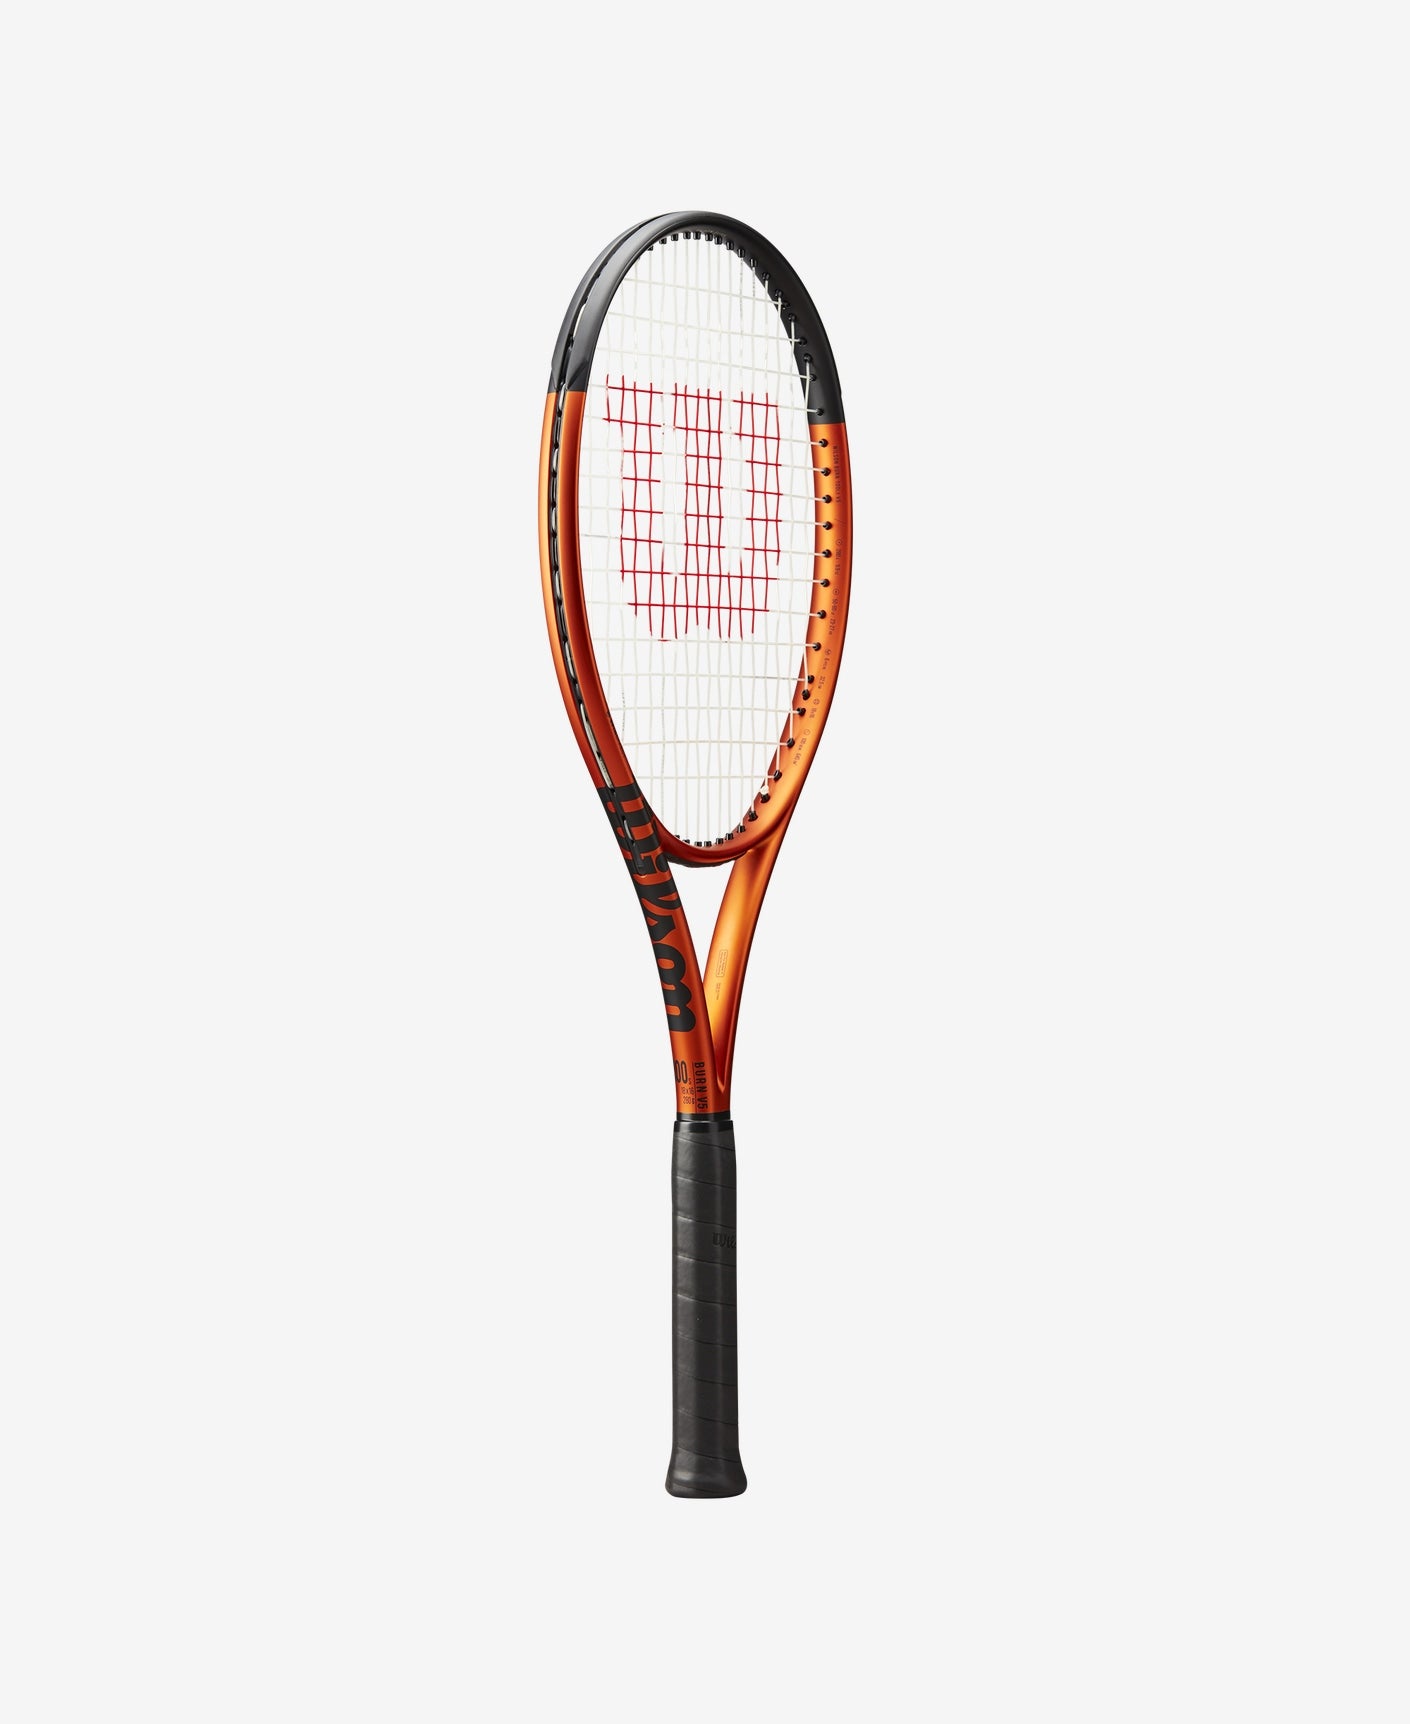 Wilson Burn 100S V5 Tennis Racket: Power and Spin